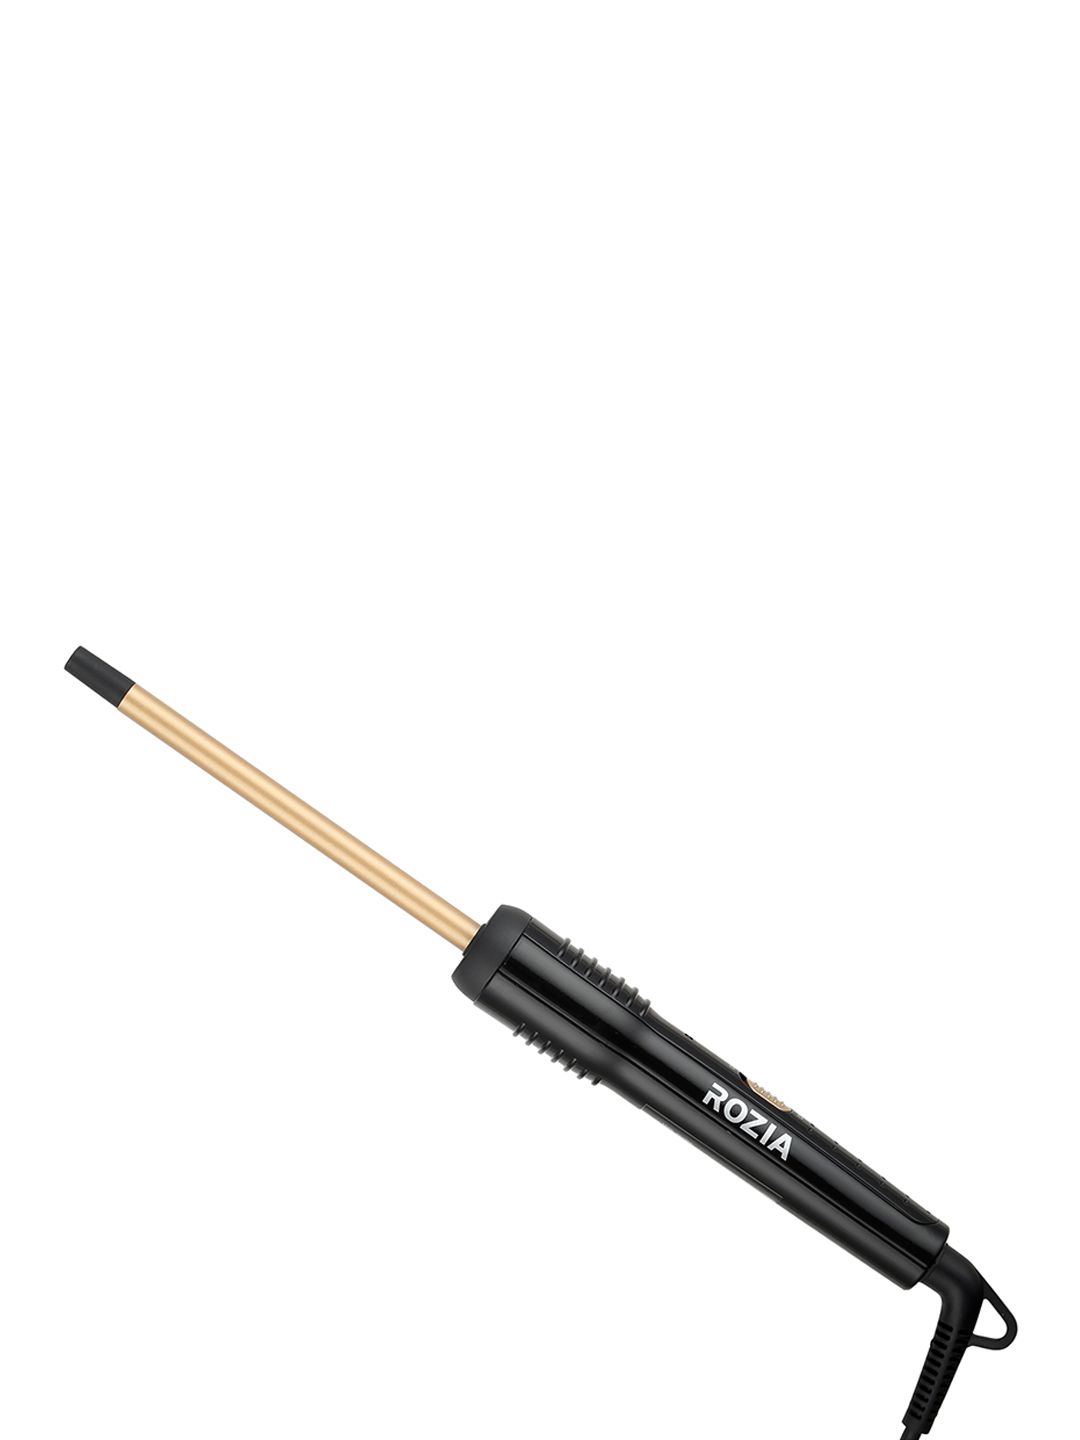 Rozia Black Chopstick Hair Curler HR776 Price in India